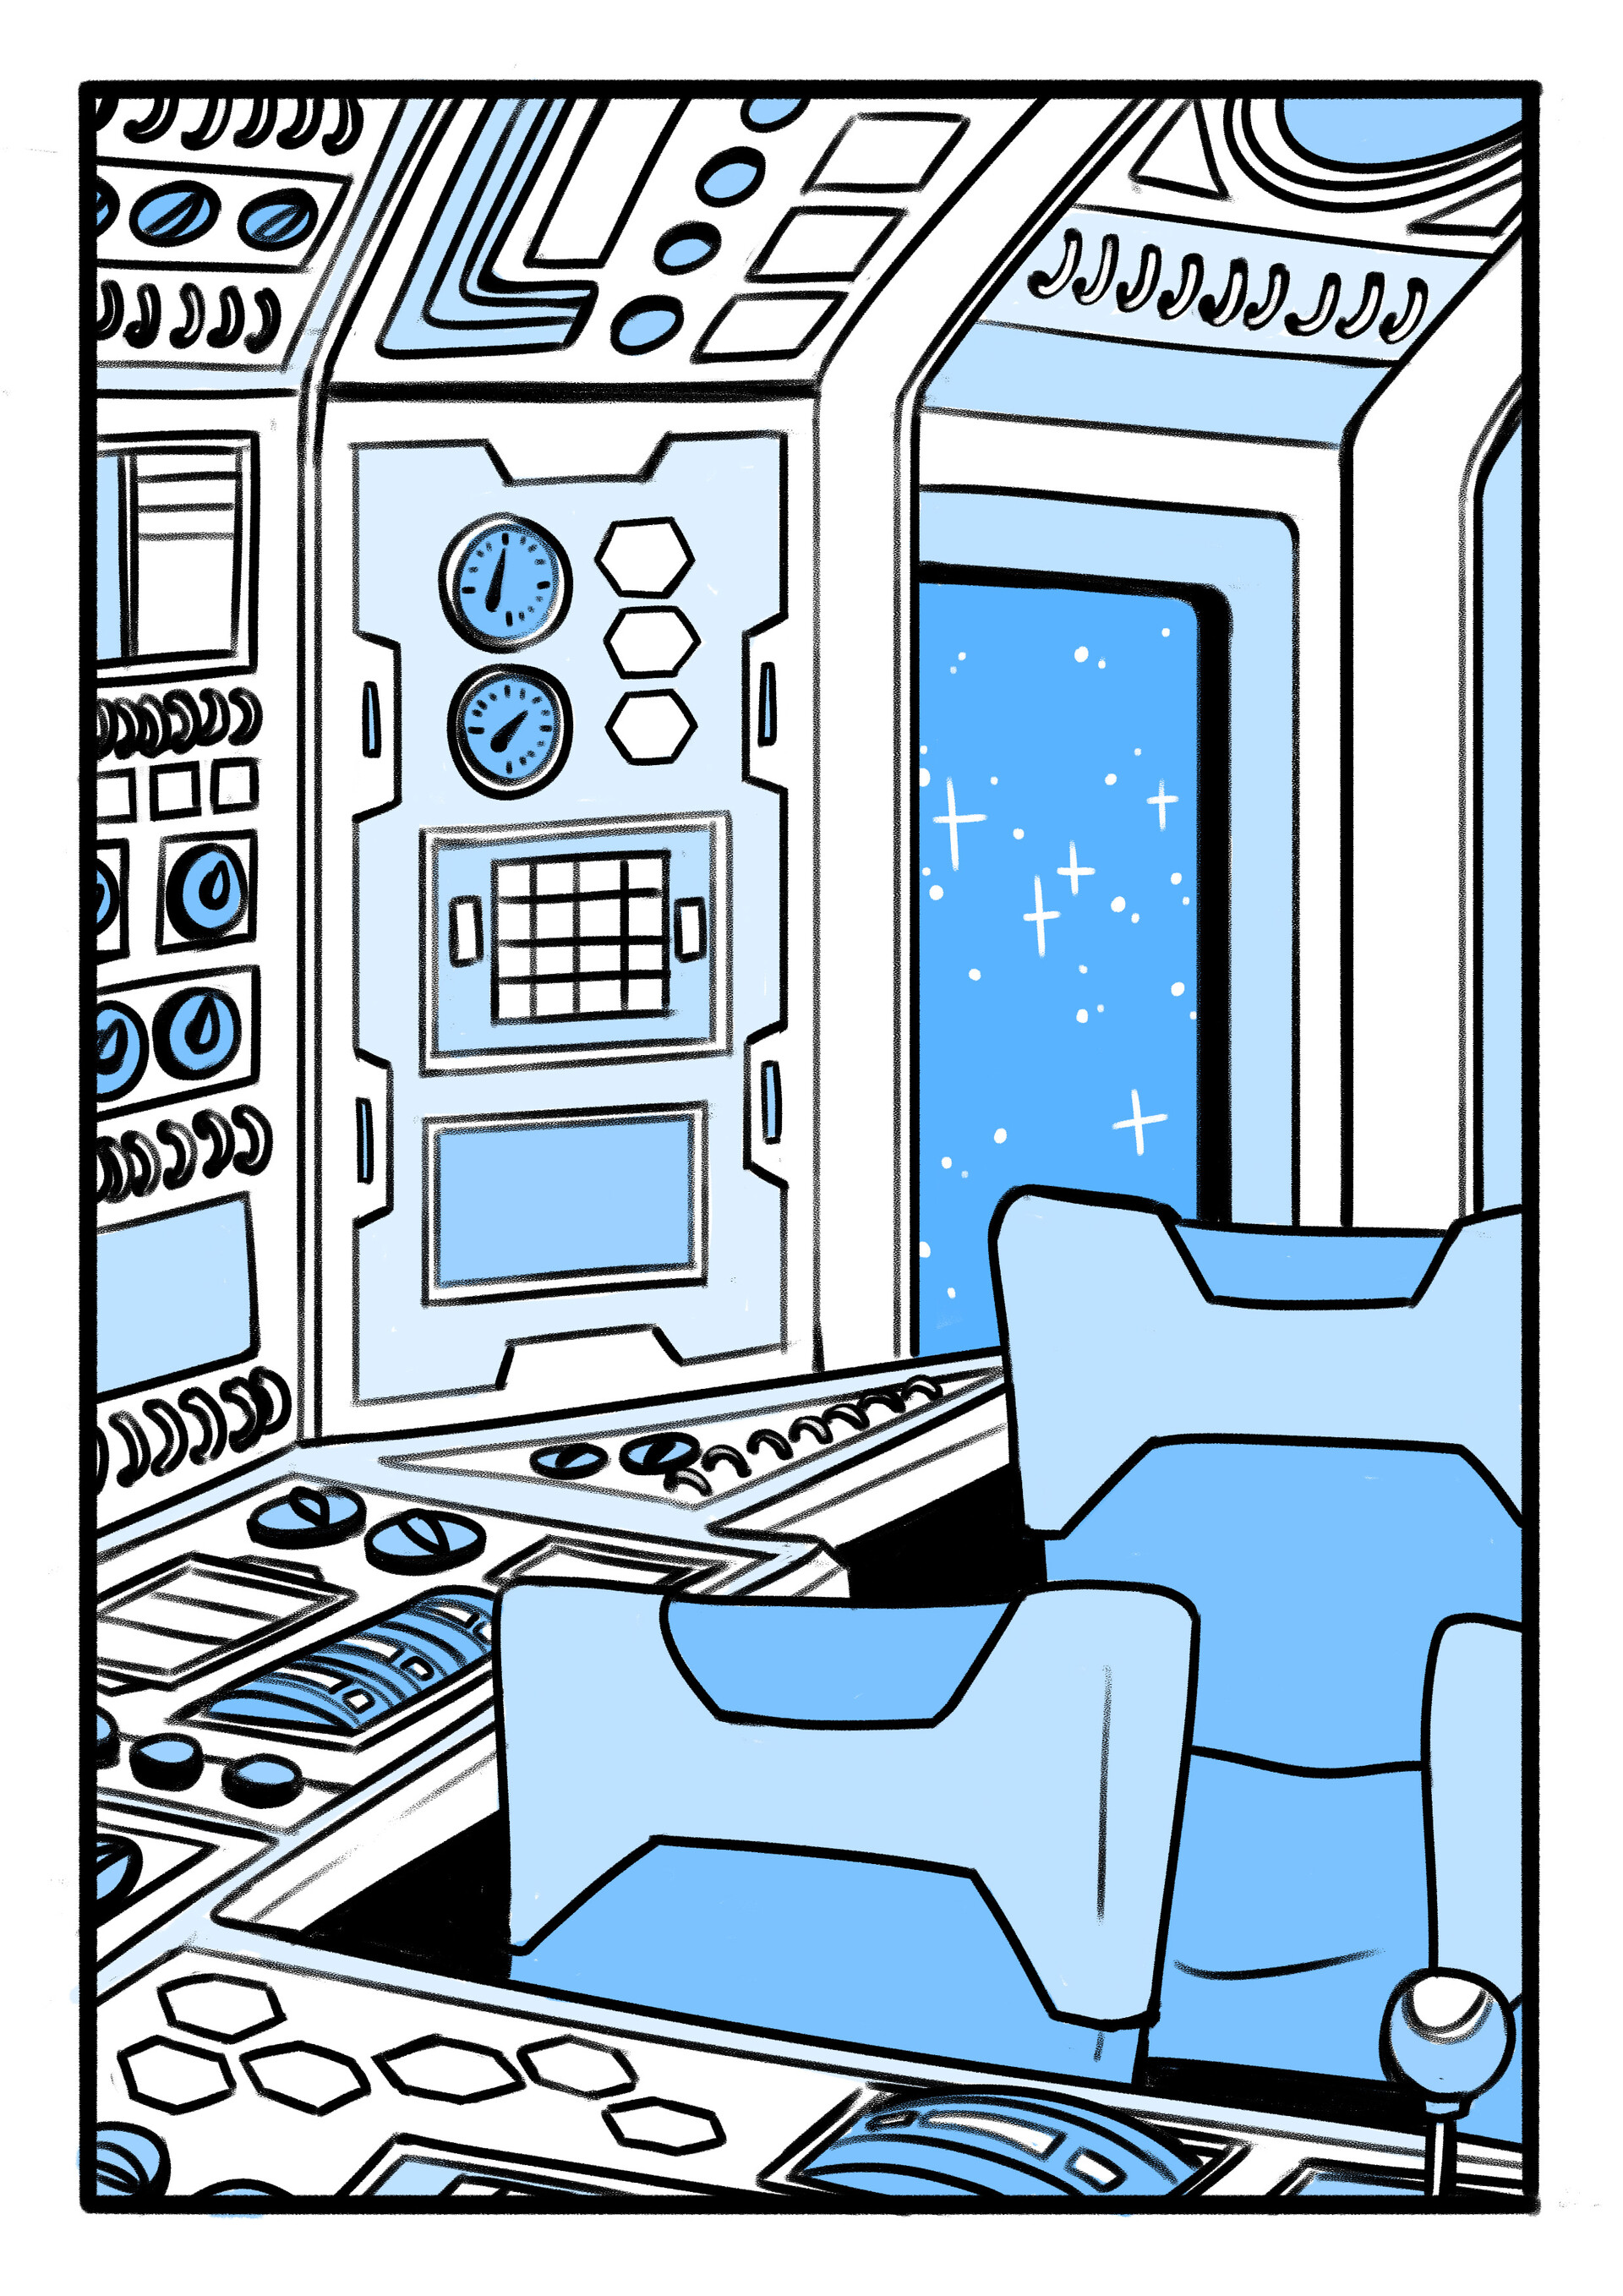 cartoon spaceship interior